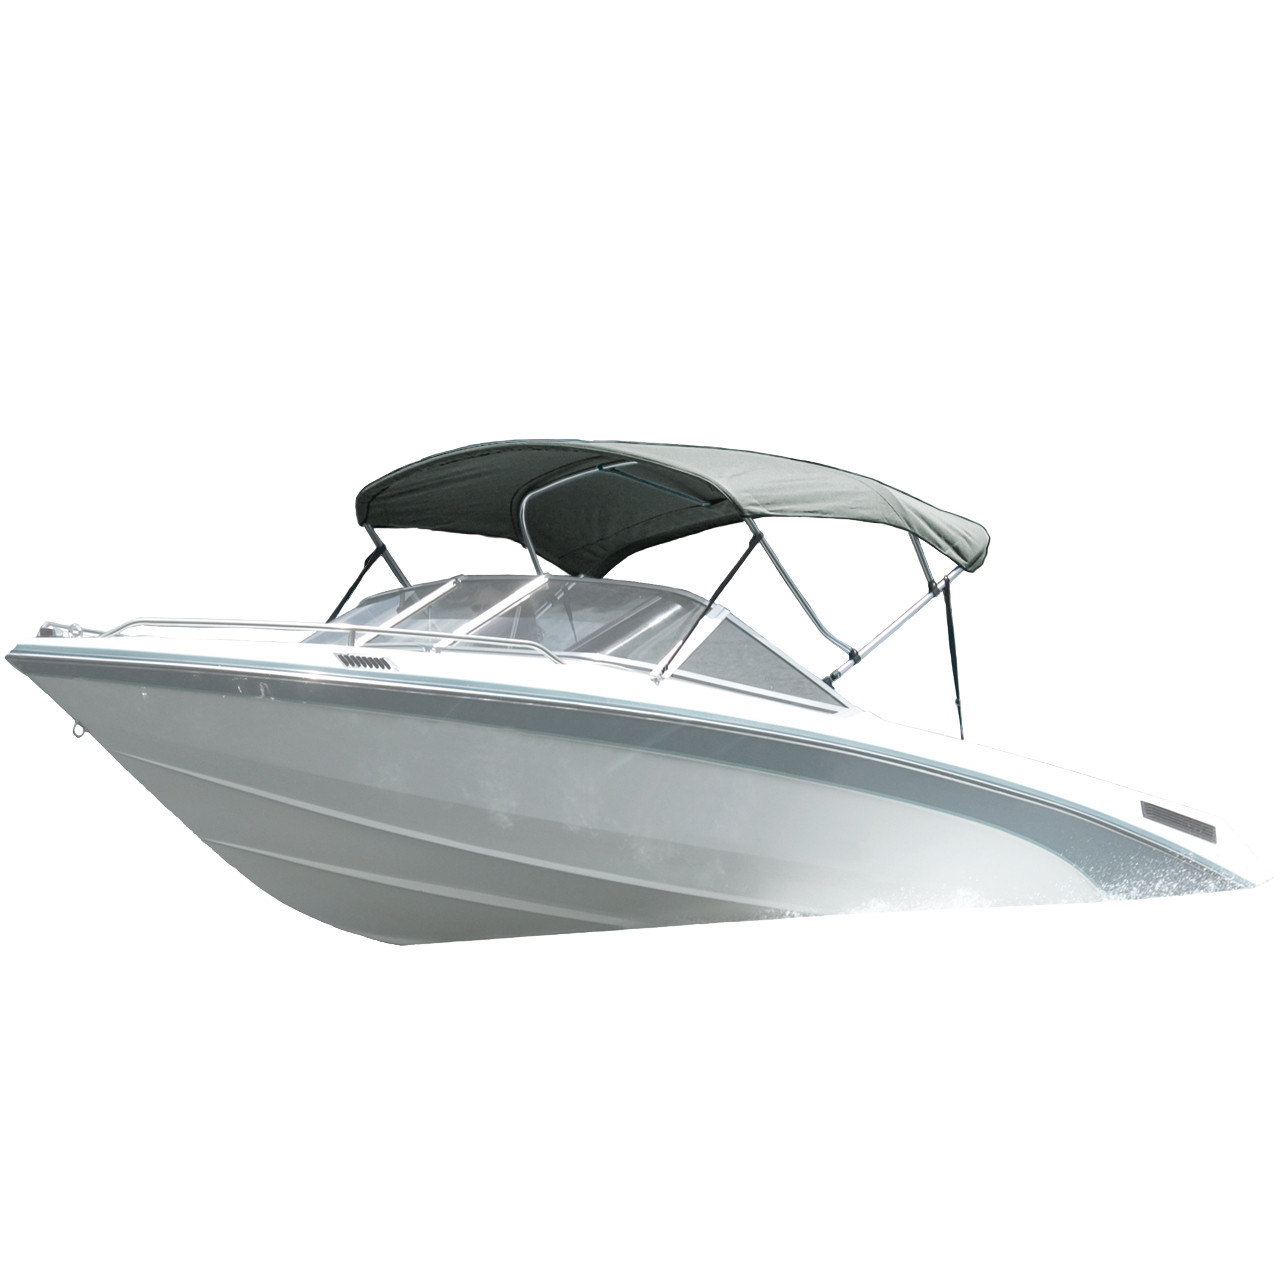 Boat Bimini Top, 57-60 W x 30 H x 5' L, Carver